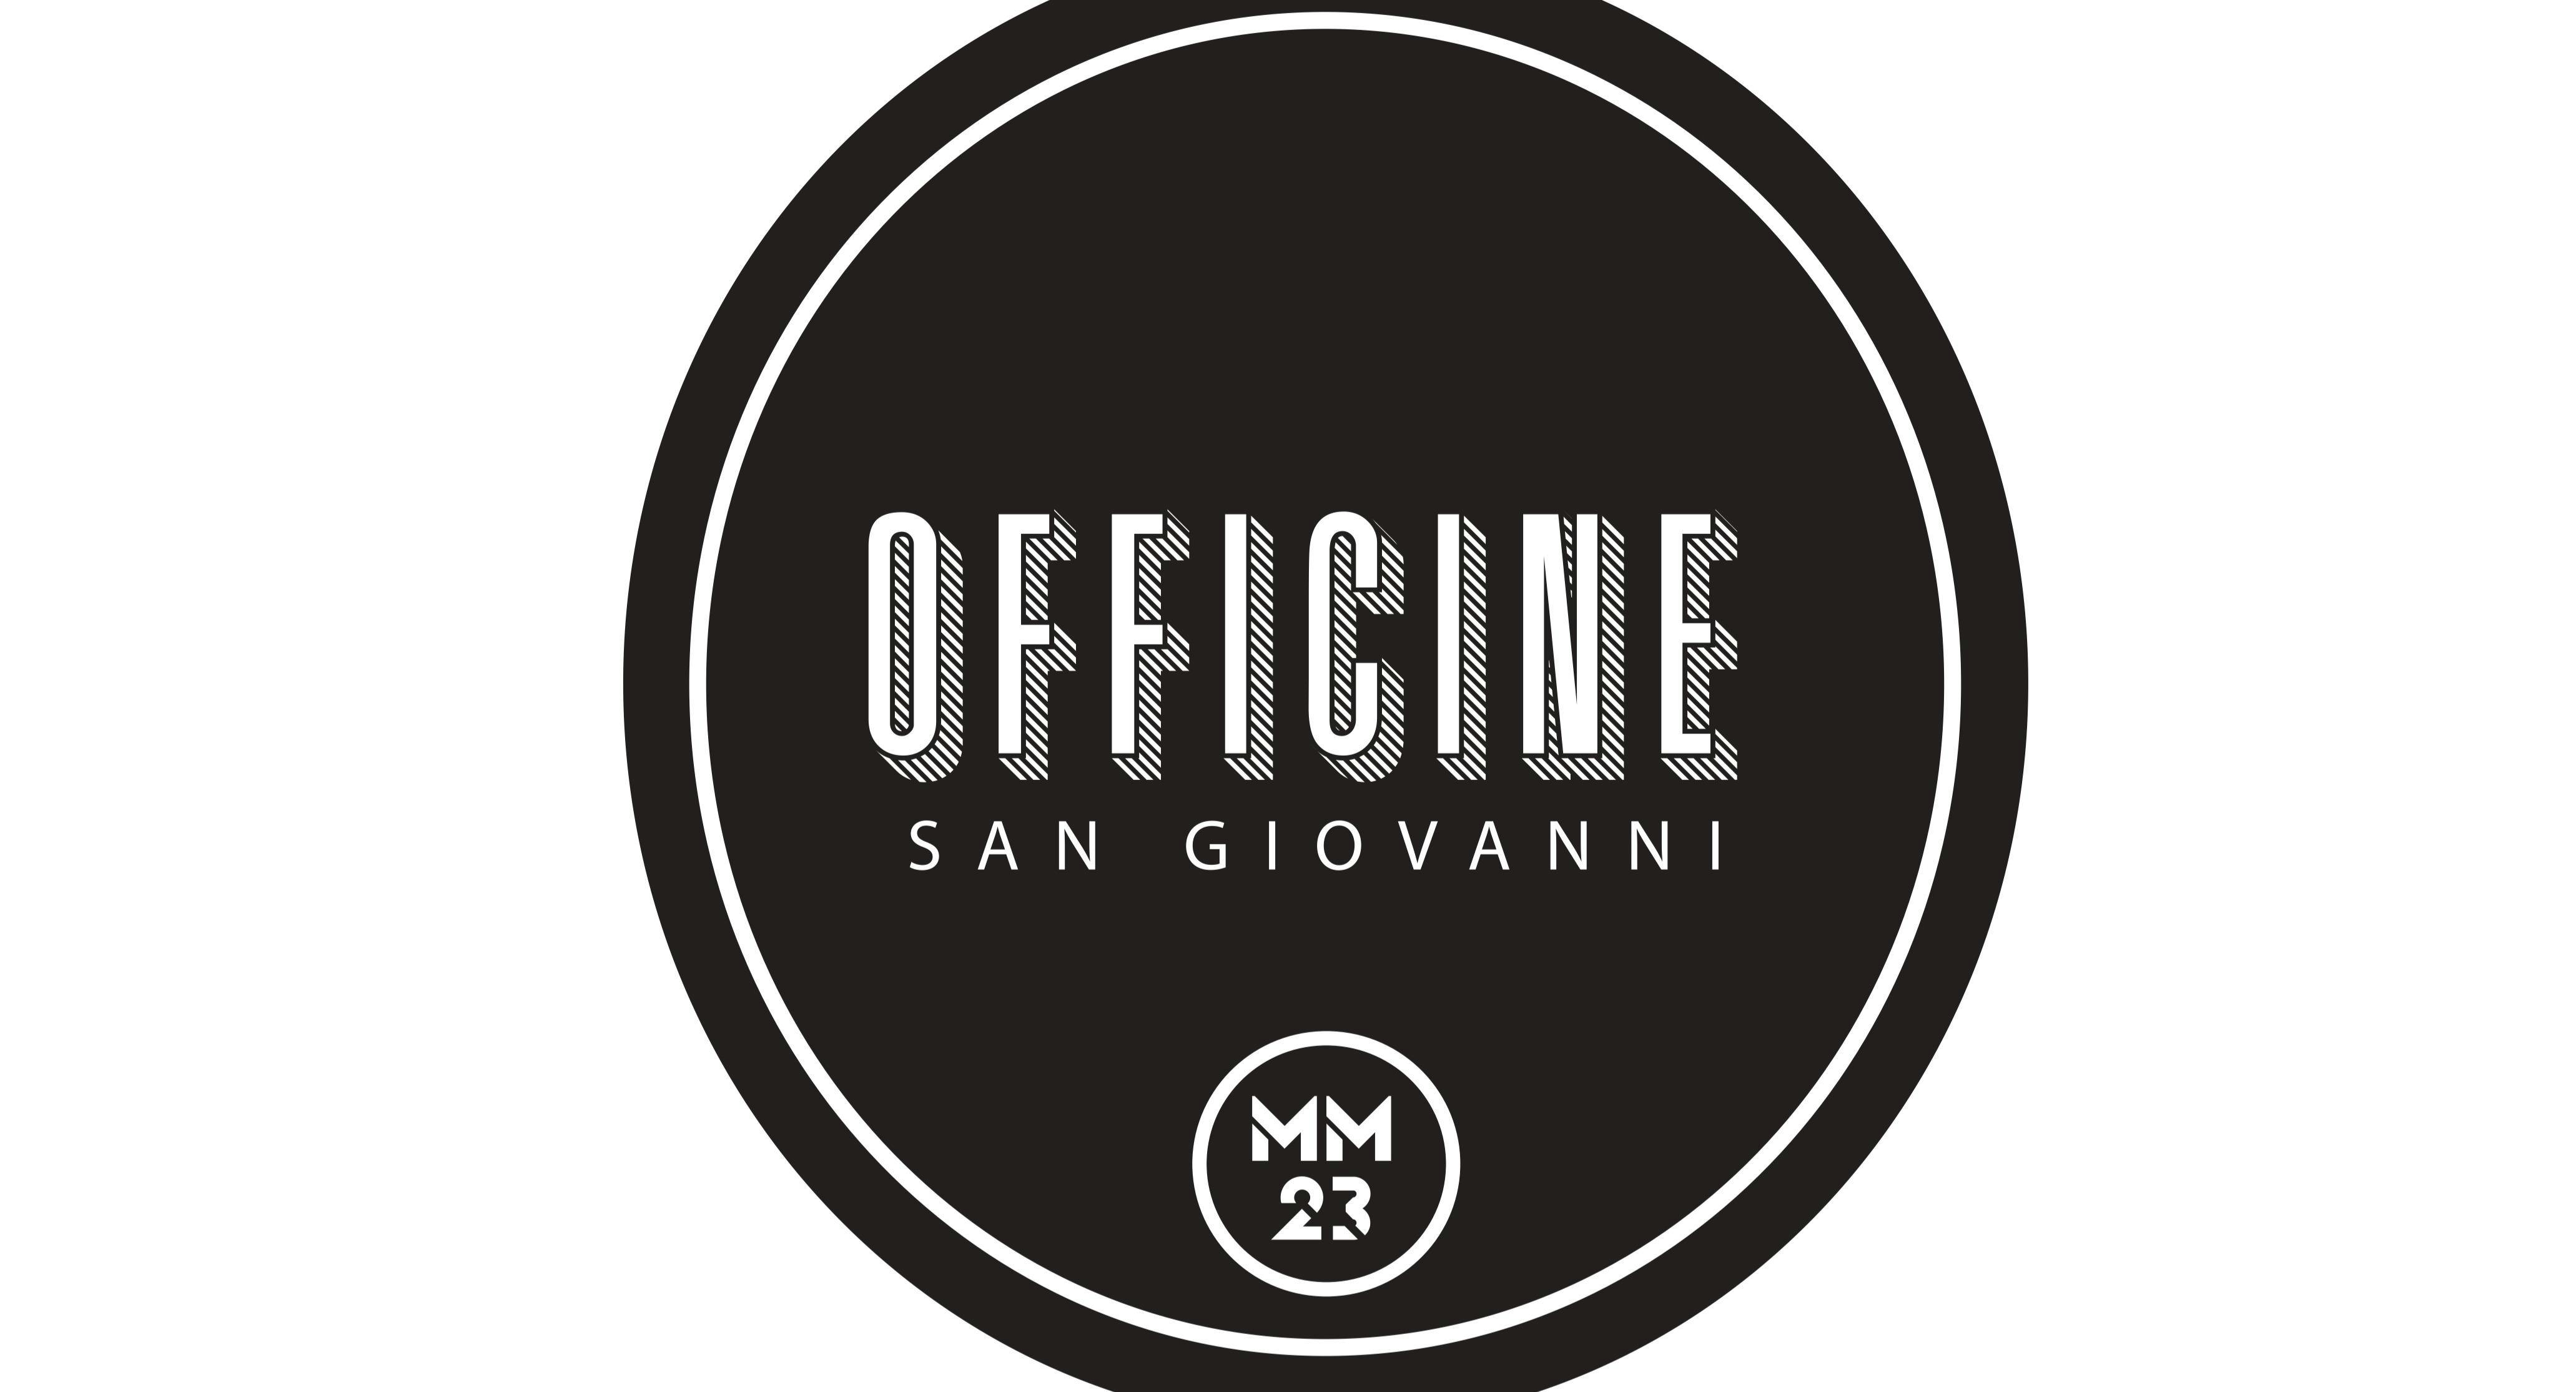 Photo of restaurant Officine San Giovanni in San Giovanni, Rome